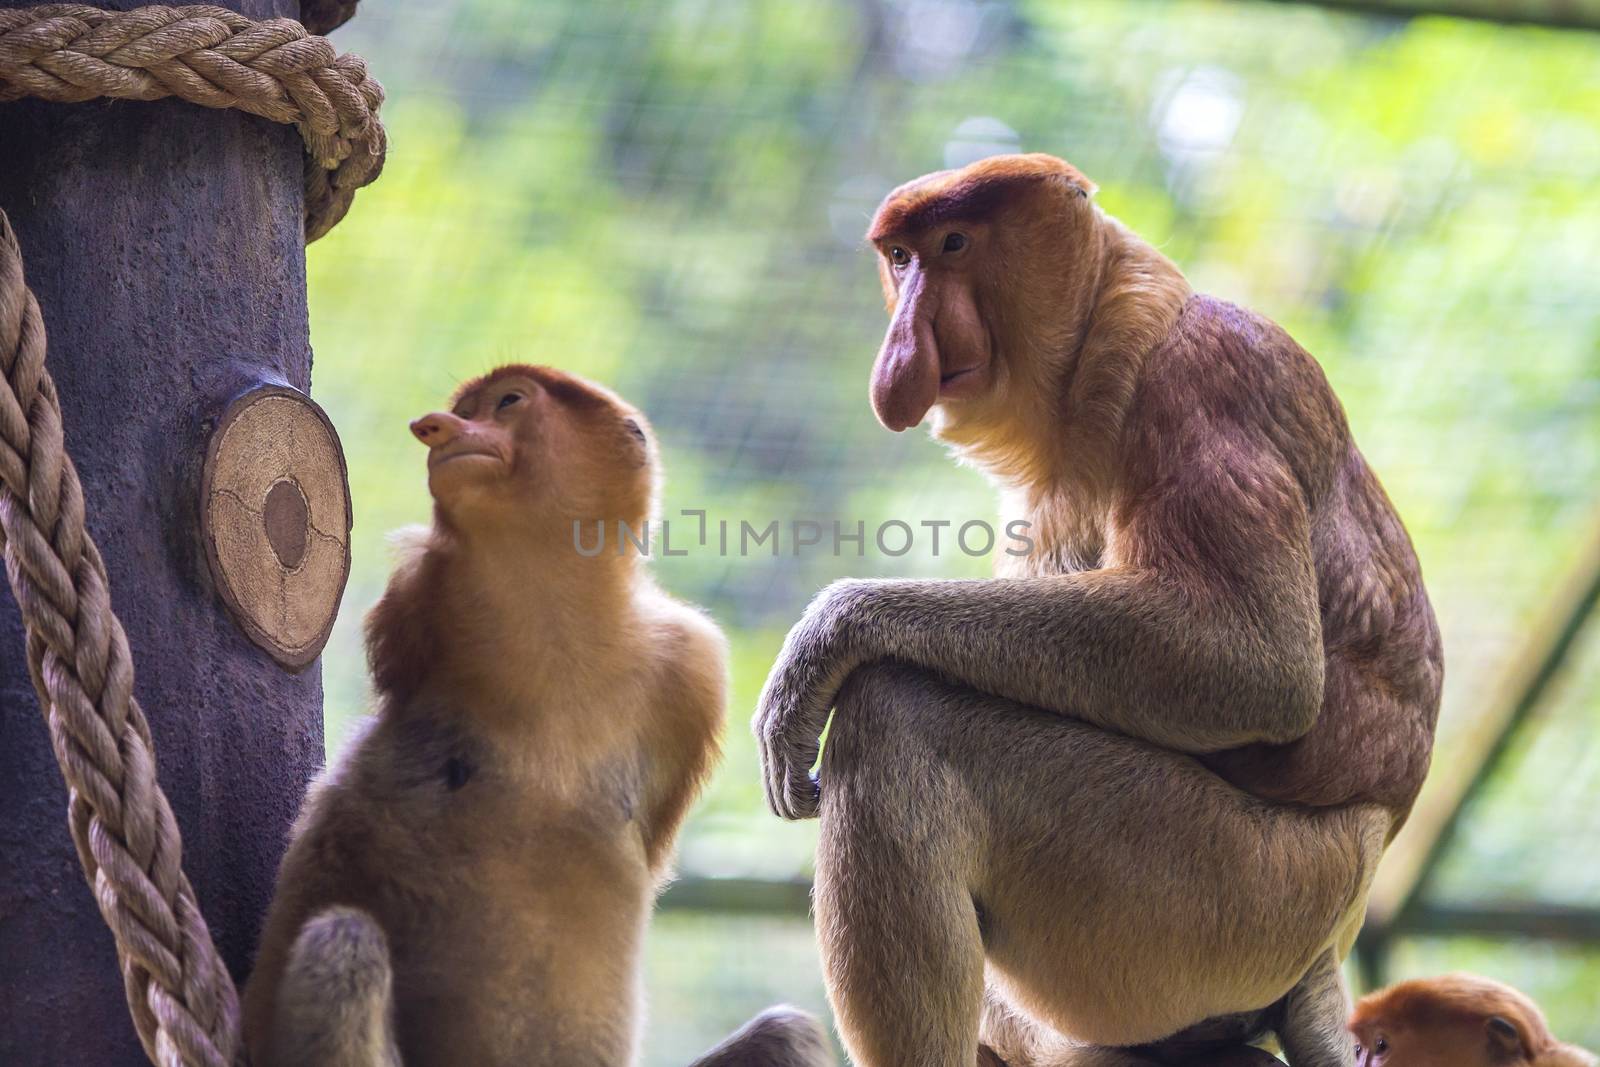 Proboscis monkey in the zoo garden. by truphoto